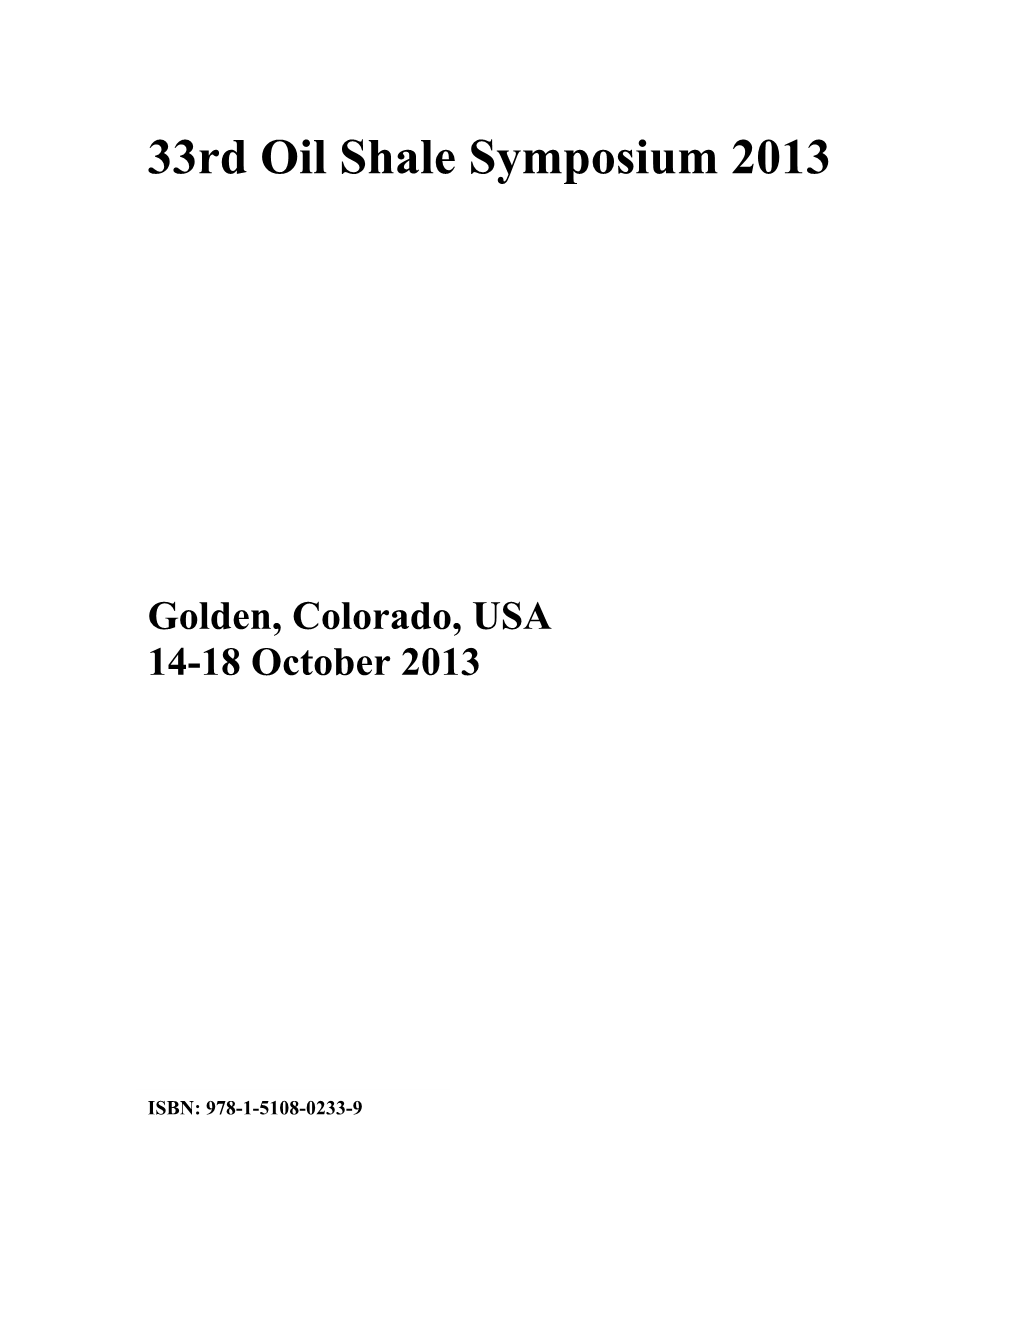 33Rd Oil Shale Symposium 2013